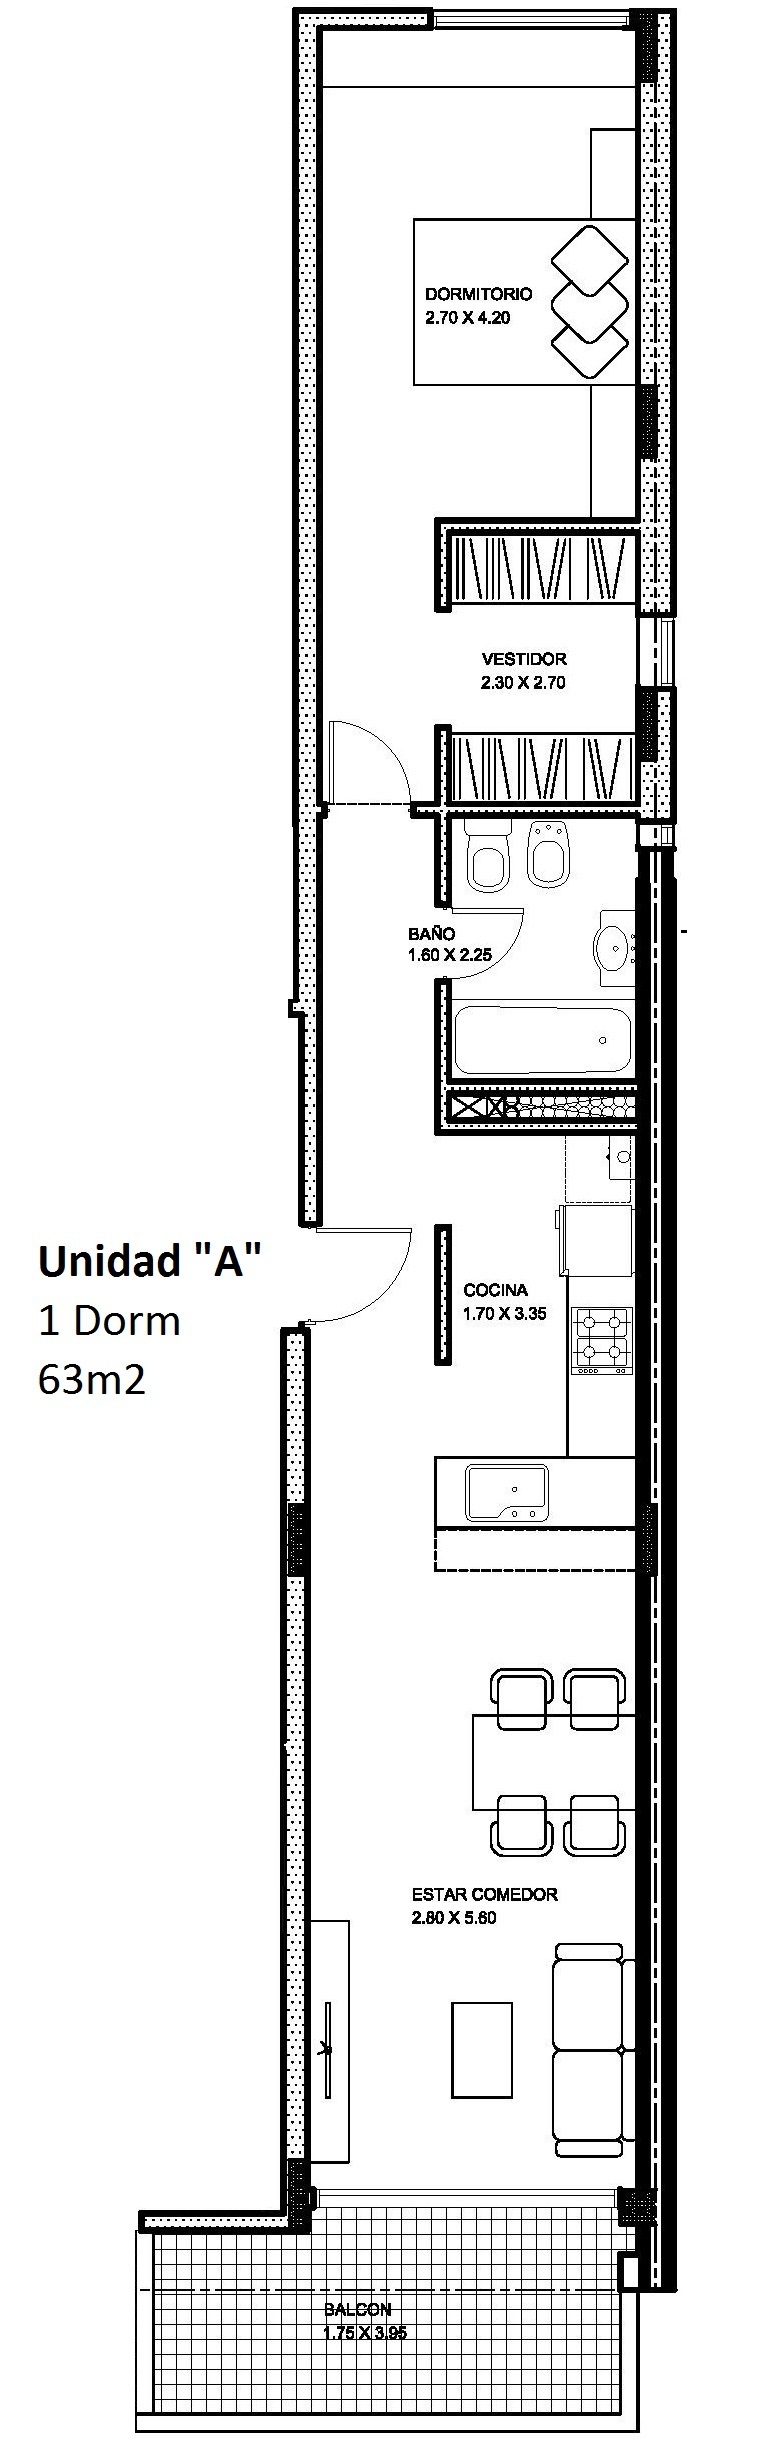 12 de 15: 1 Dormitorio A - 63m2